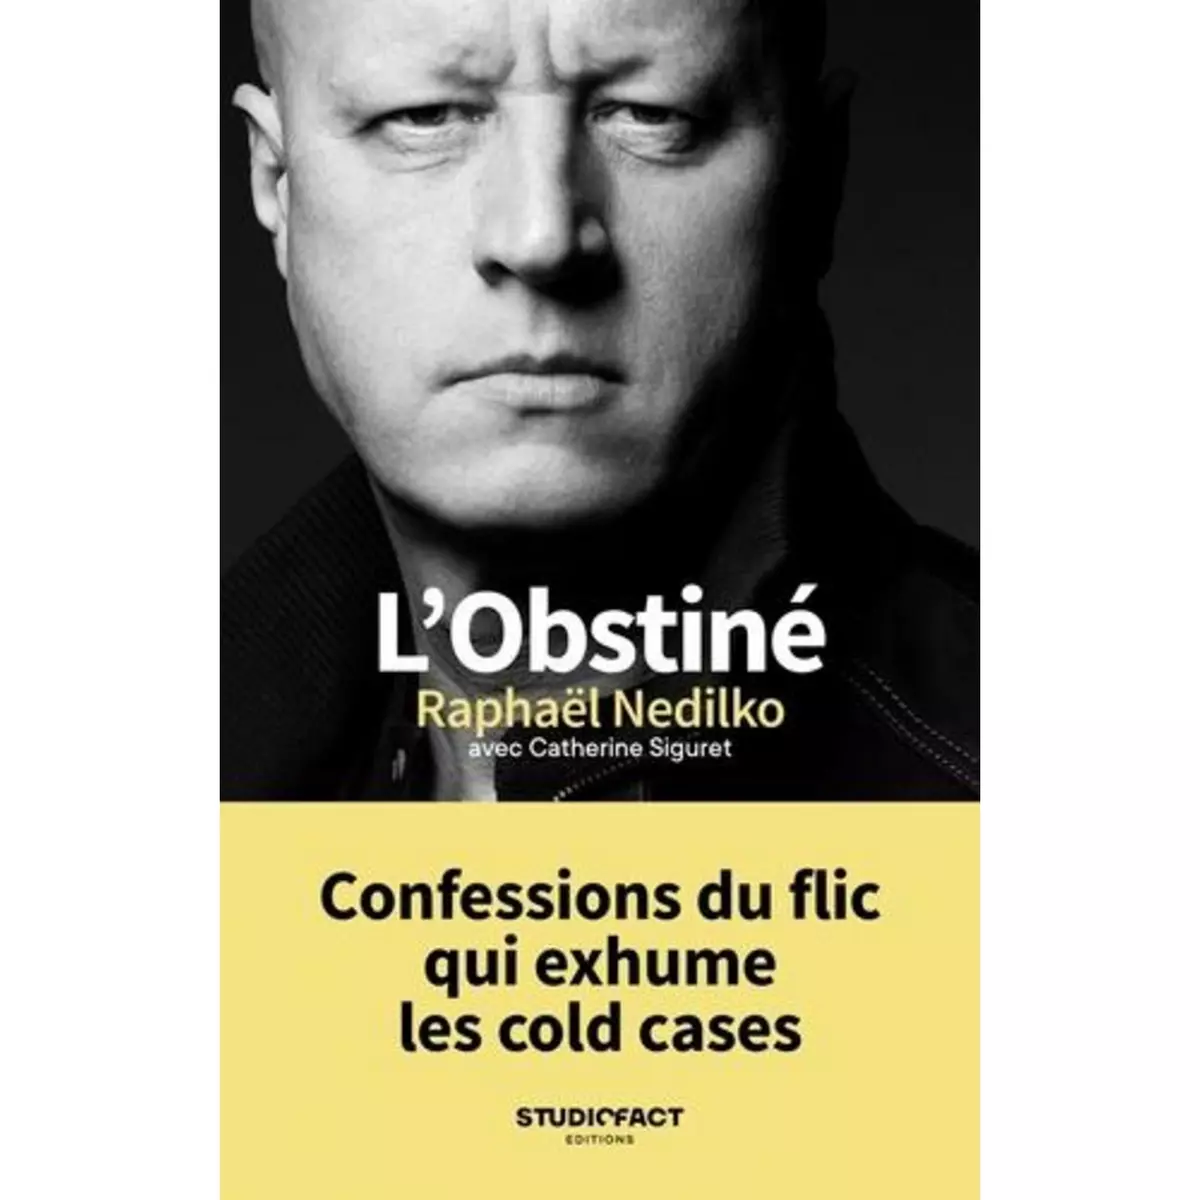  L'OBSTINE. CONFESSIONS DU FLIC QUI EXHUME LES COLD CASES, Nedilko Raphaël